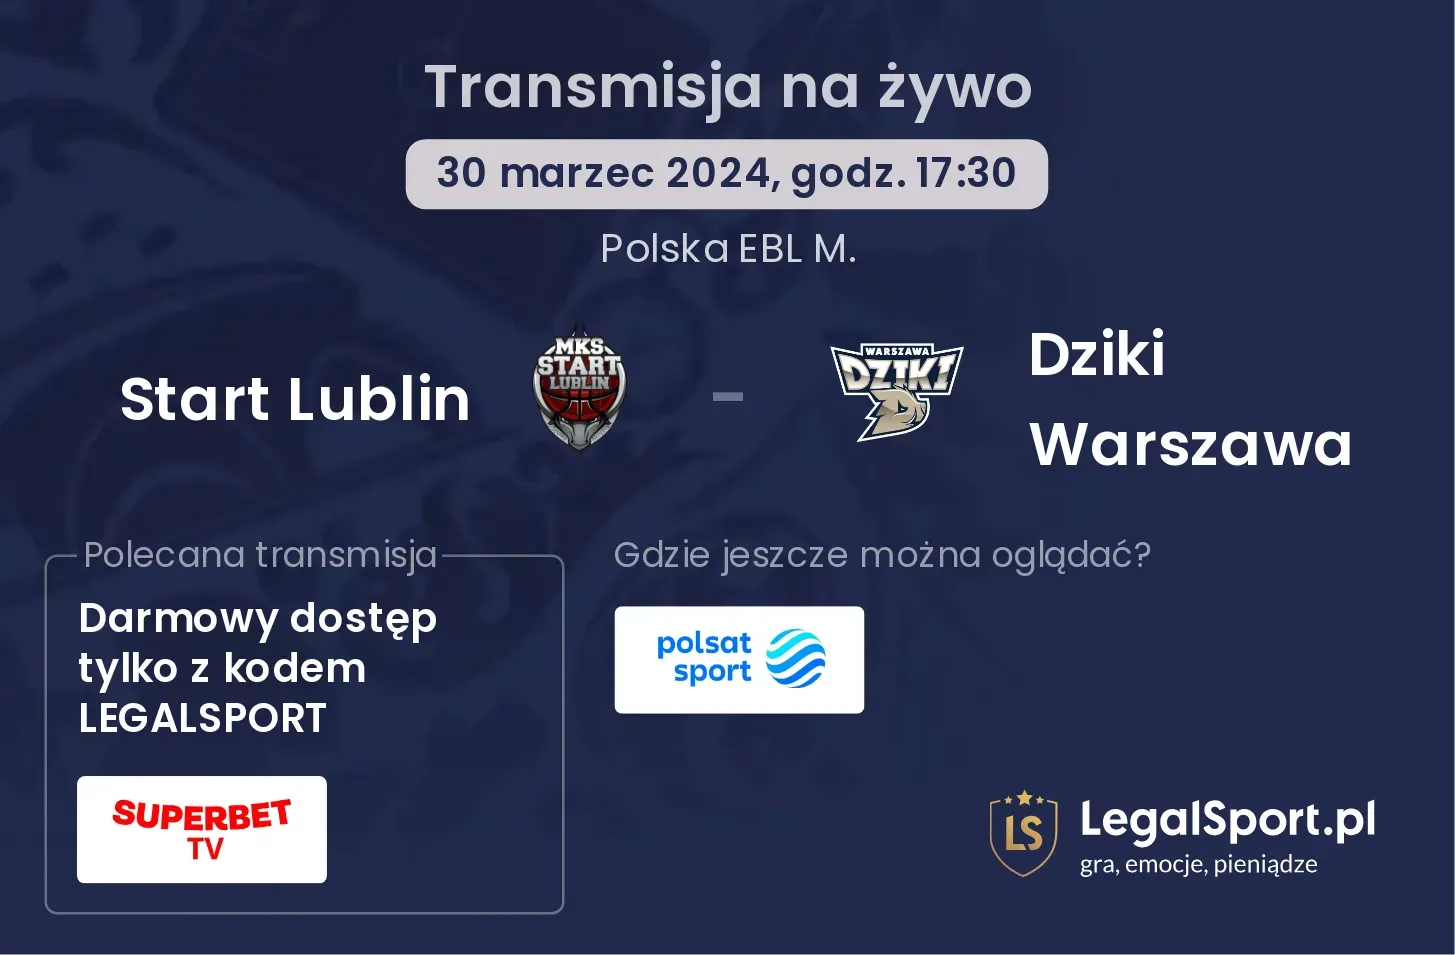 Start Lublin - Dziki Warszawa $s